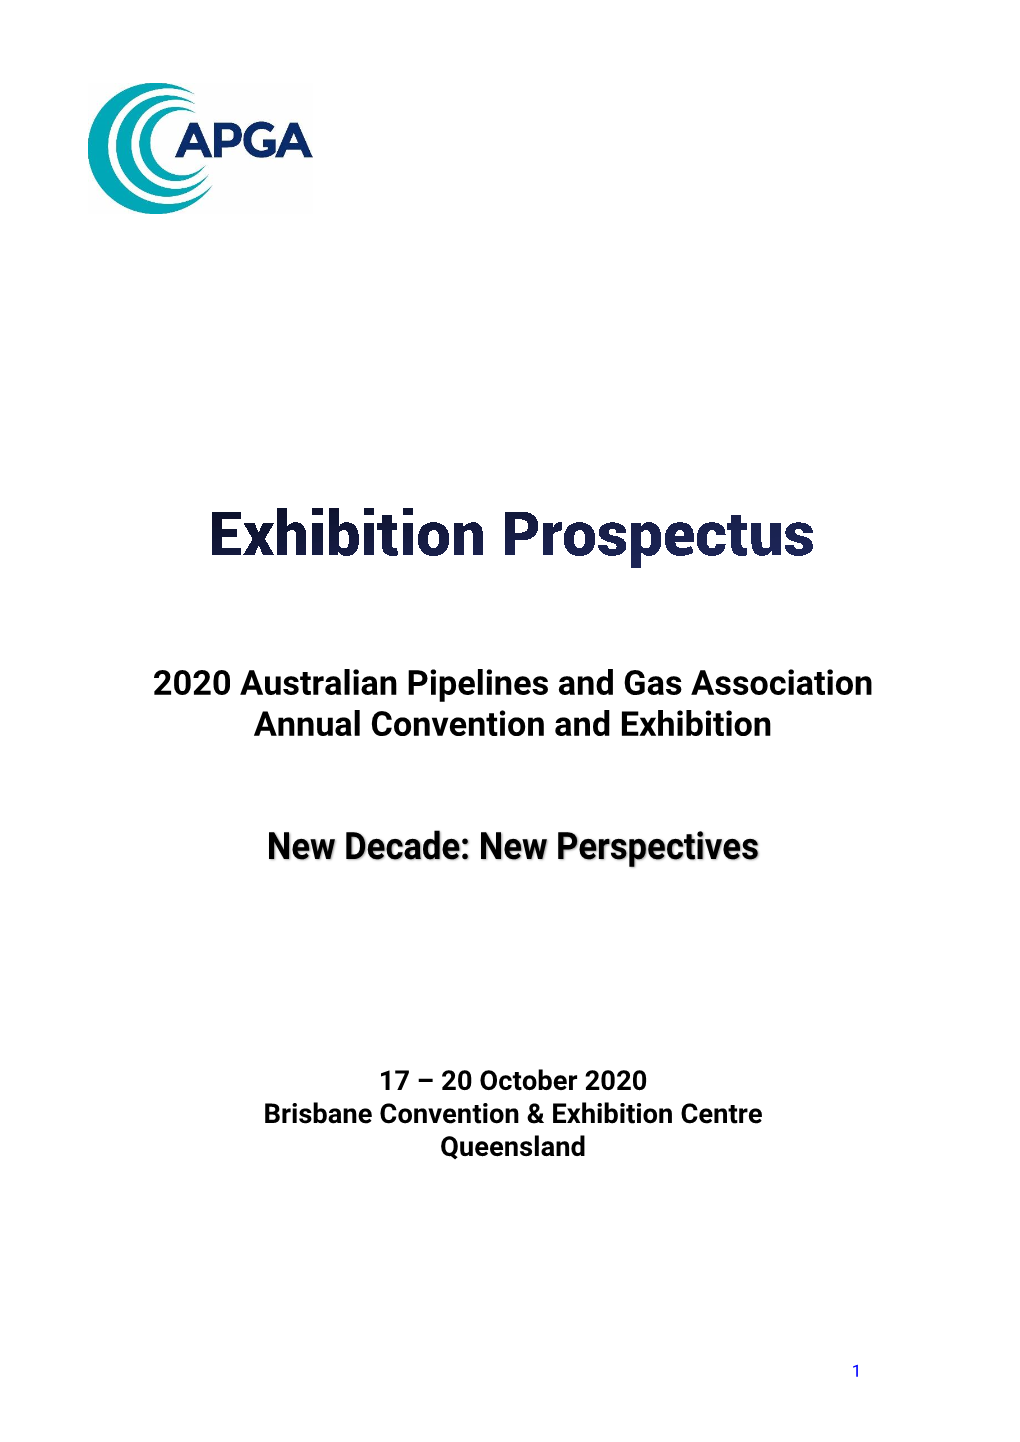 APGA 2020 Exhibition Prospectus